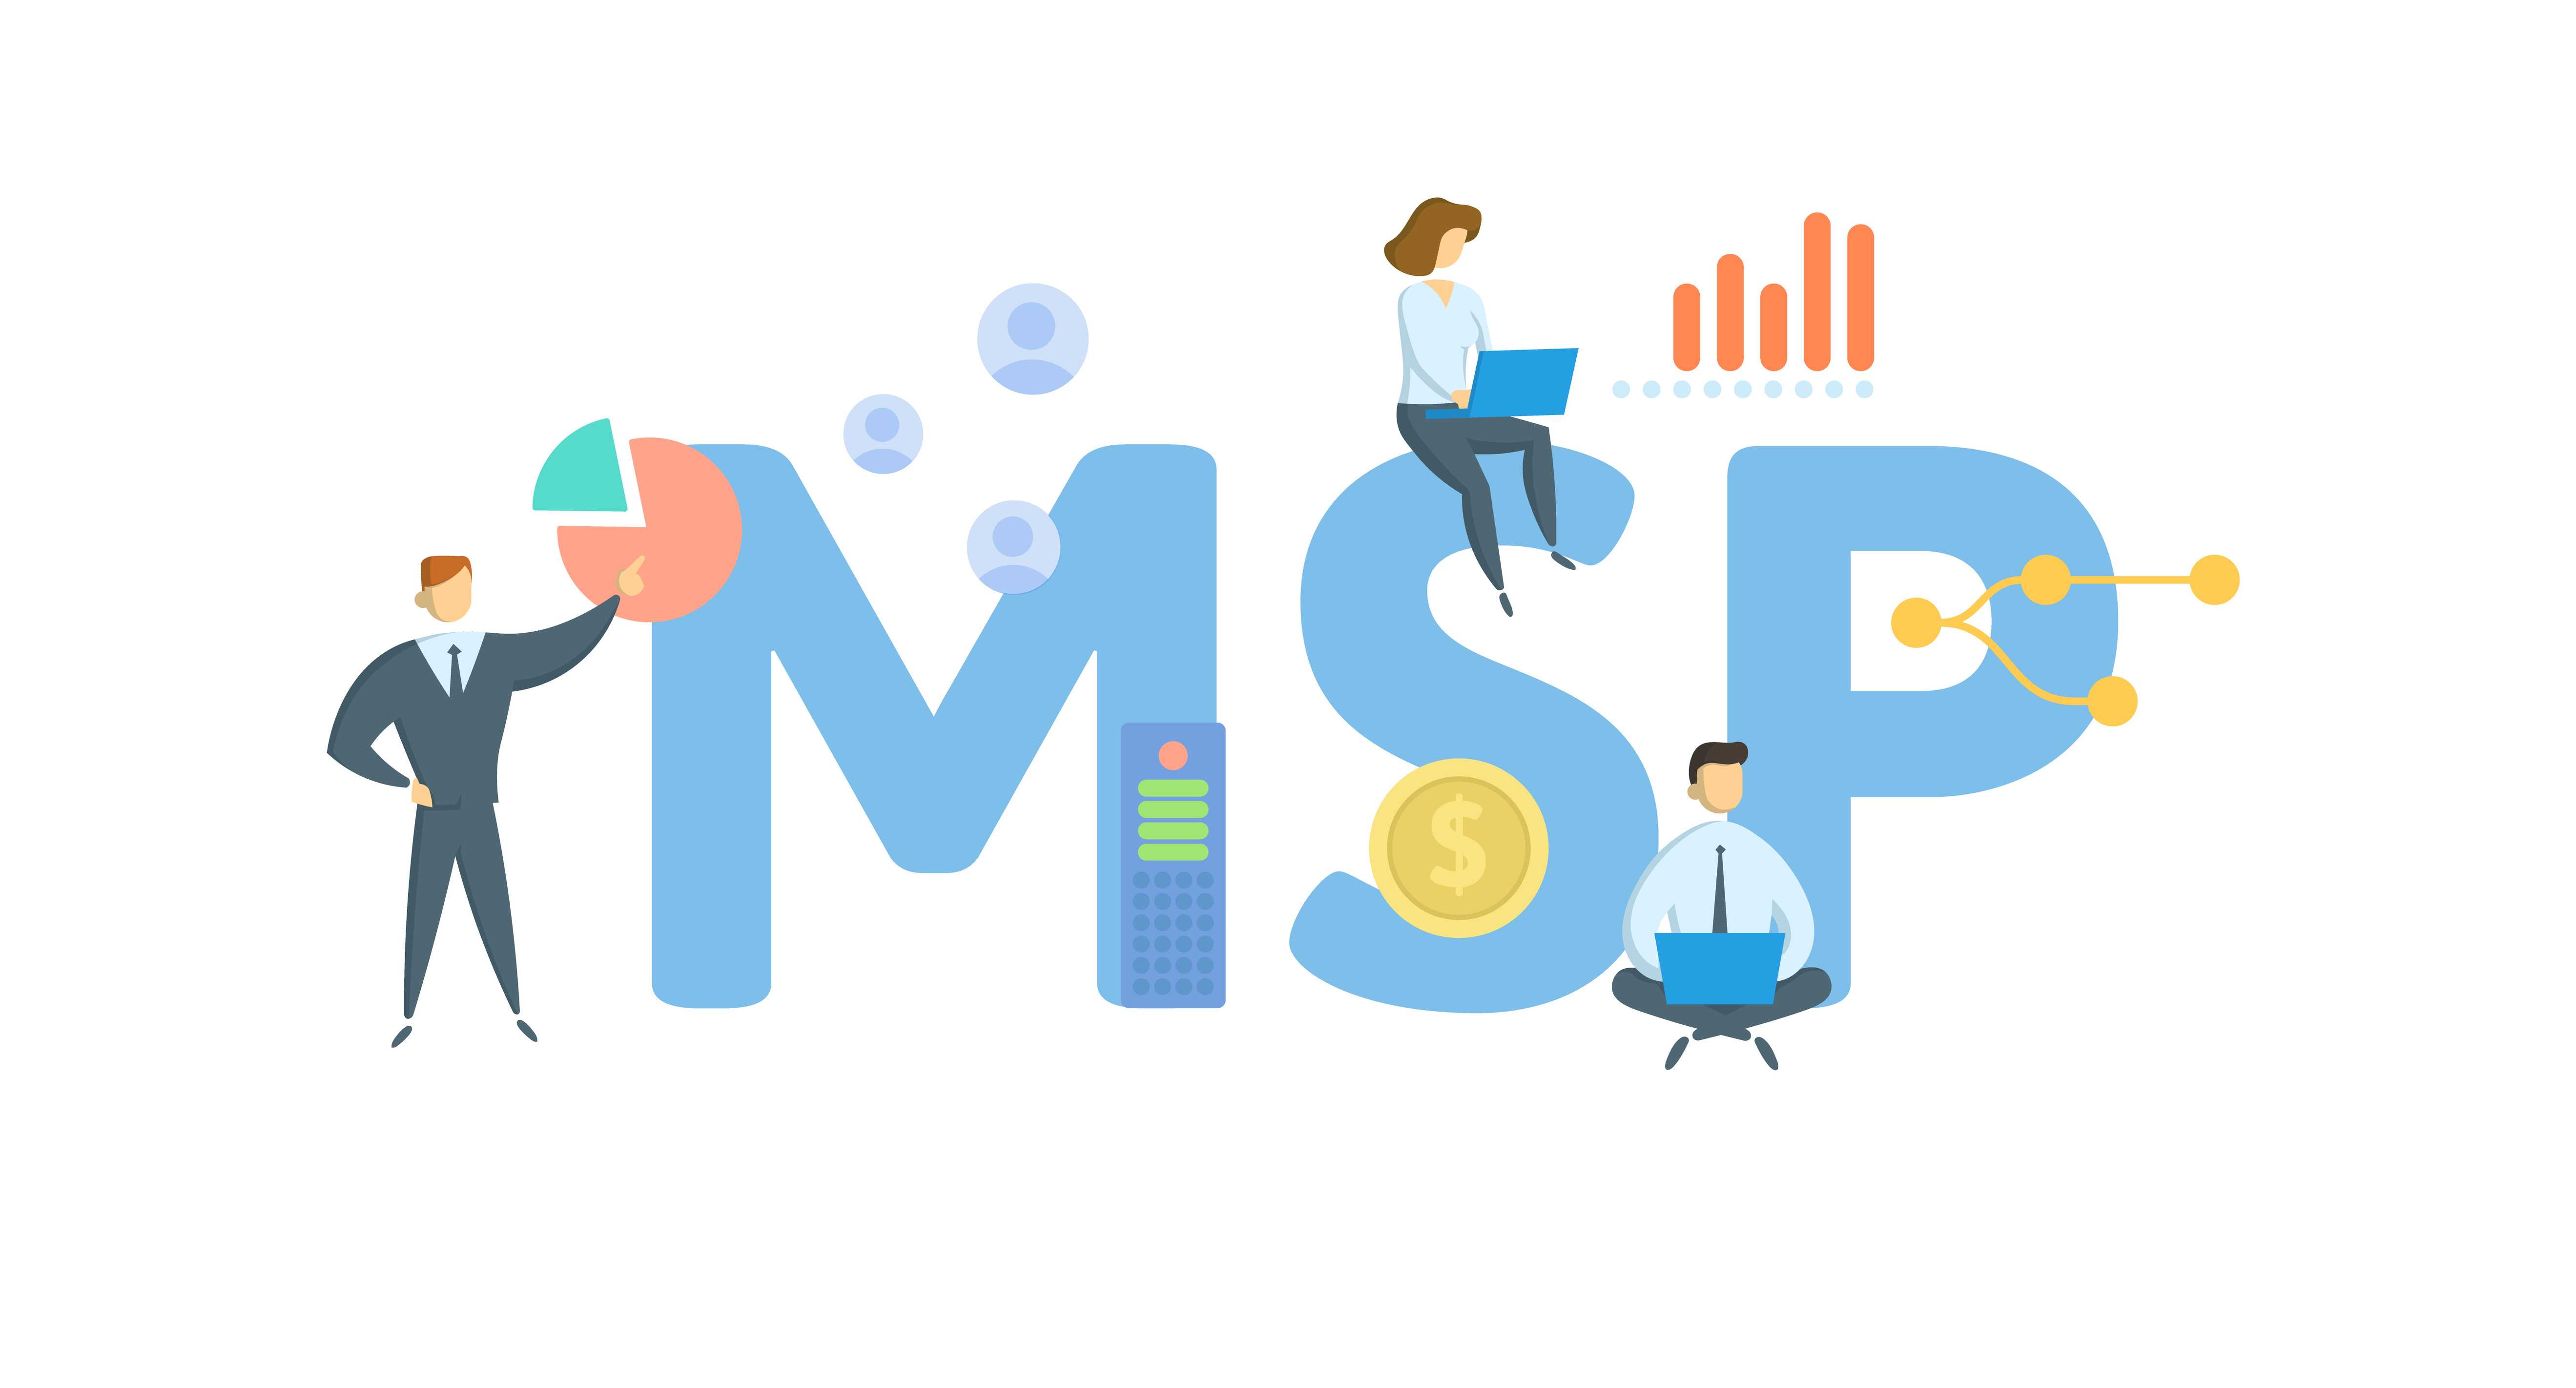 managed service providers, abbreviation MSP